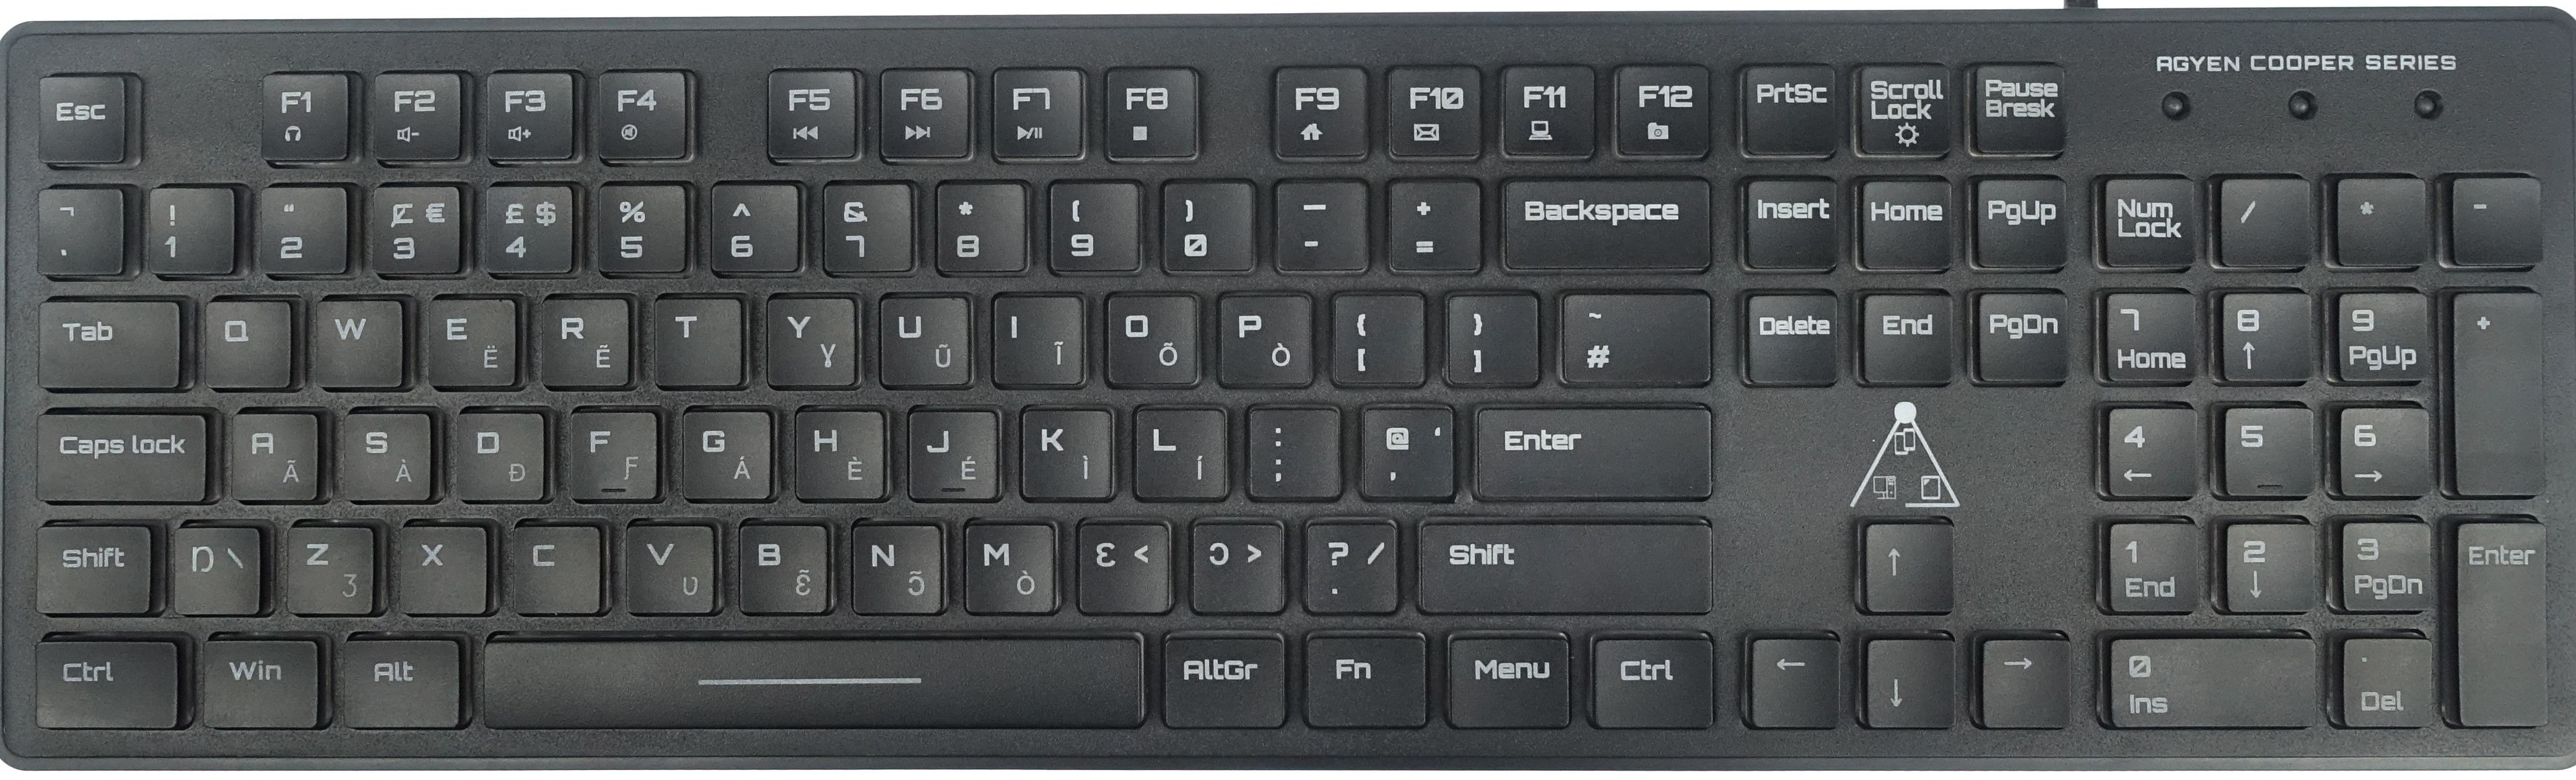 ABƐD Desktop Keyboard Brand GH